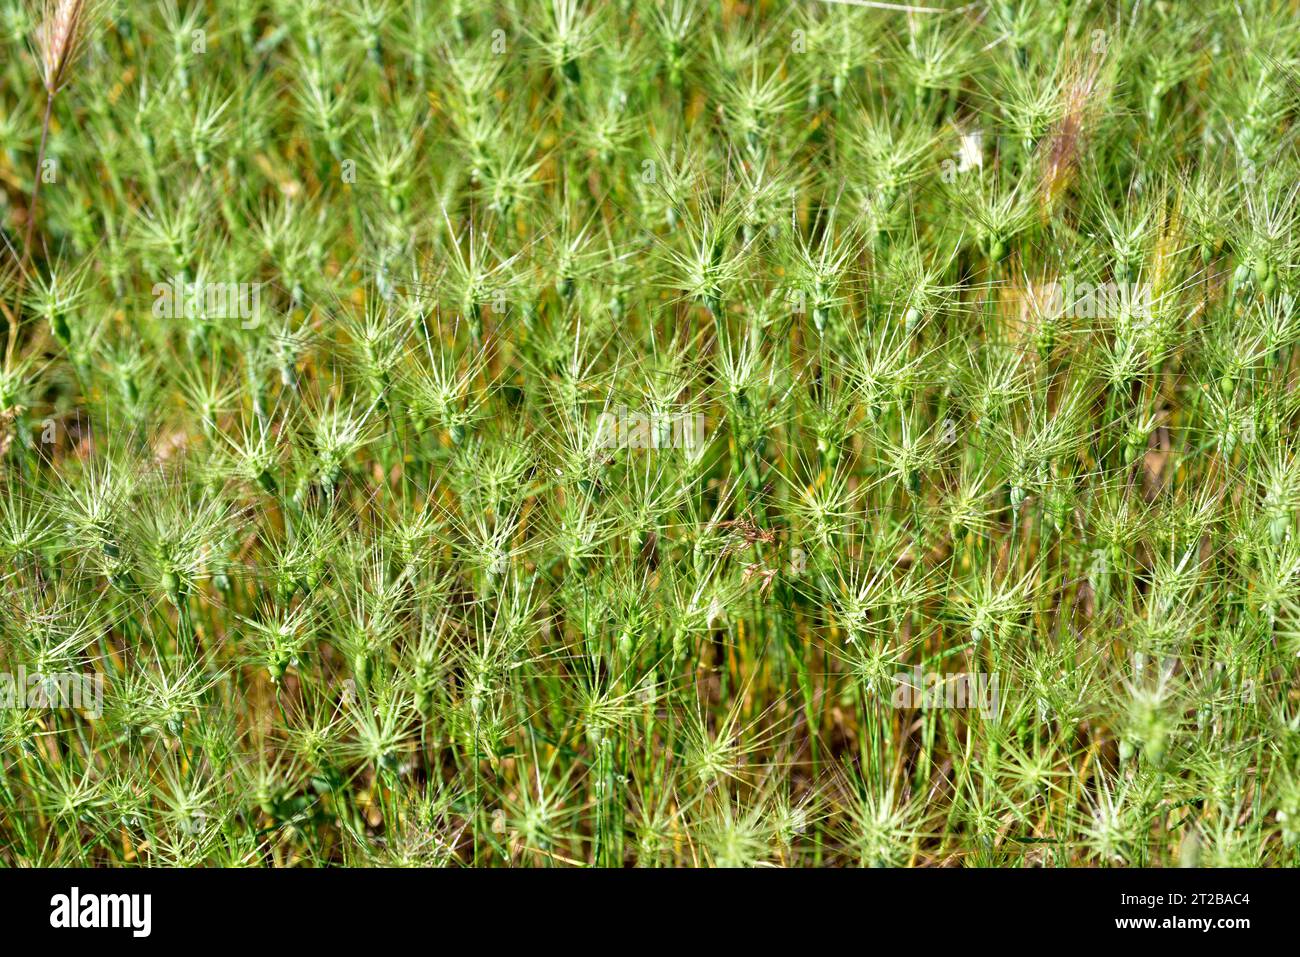 Ovate goatgrass (Aegilops geniculata) is an annual herb native to Mediterranean region.This photo was taken in Adahuesca, Huesca, Aragon, Spain. Stock Photo